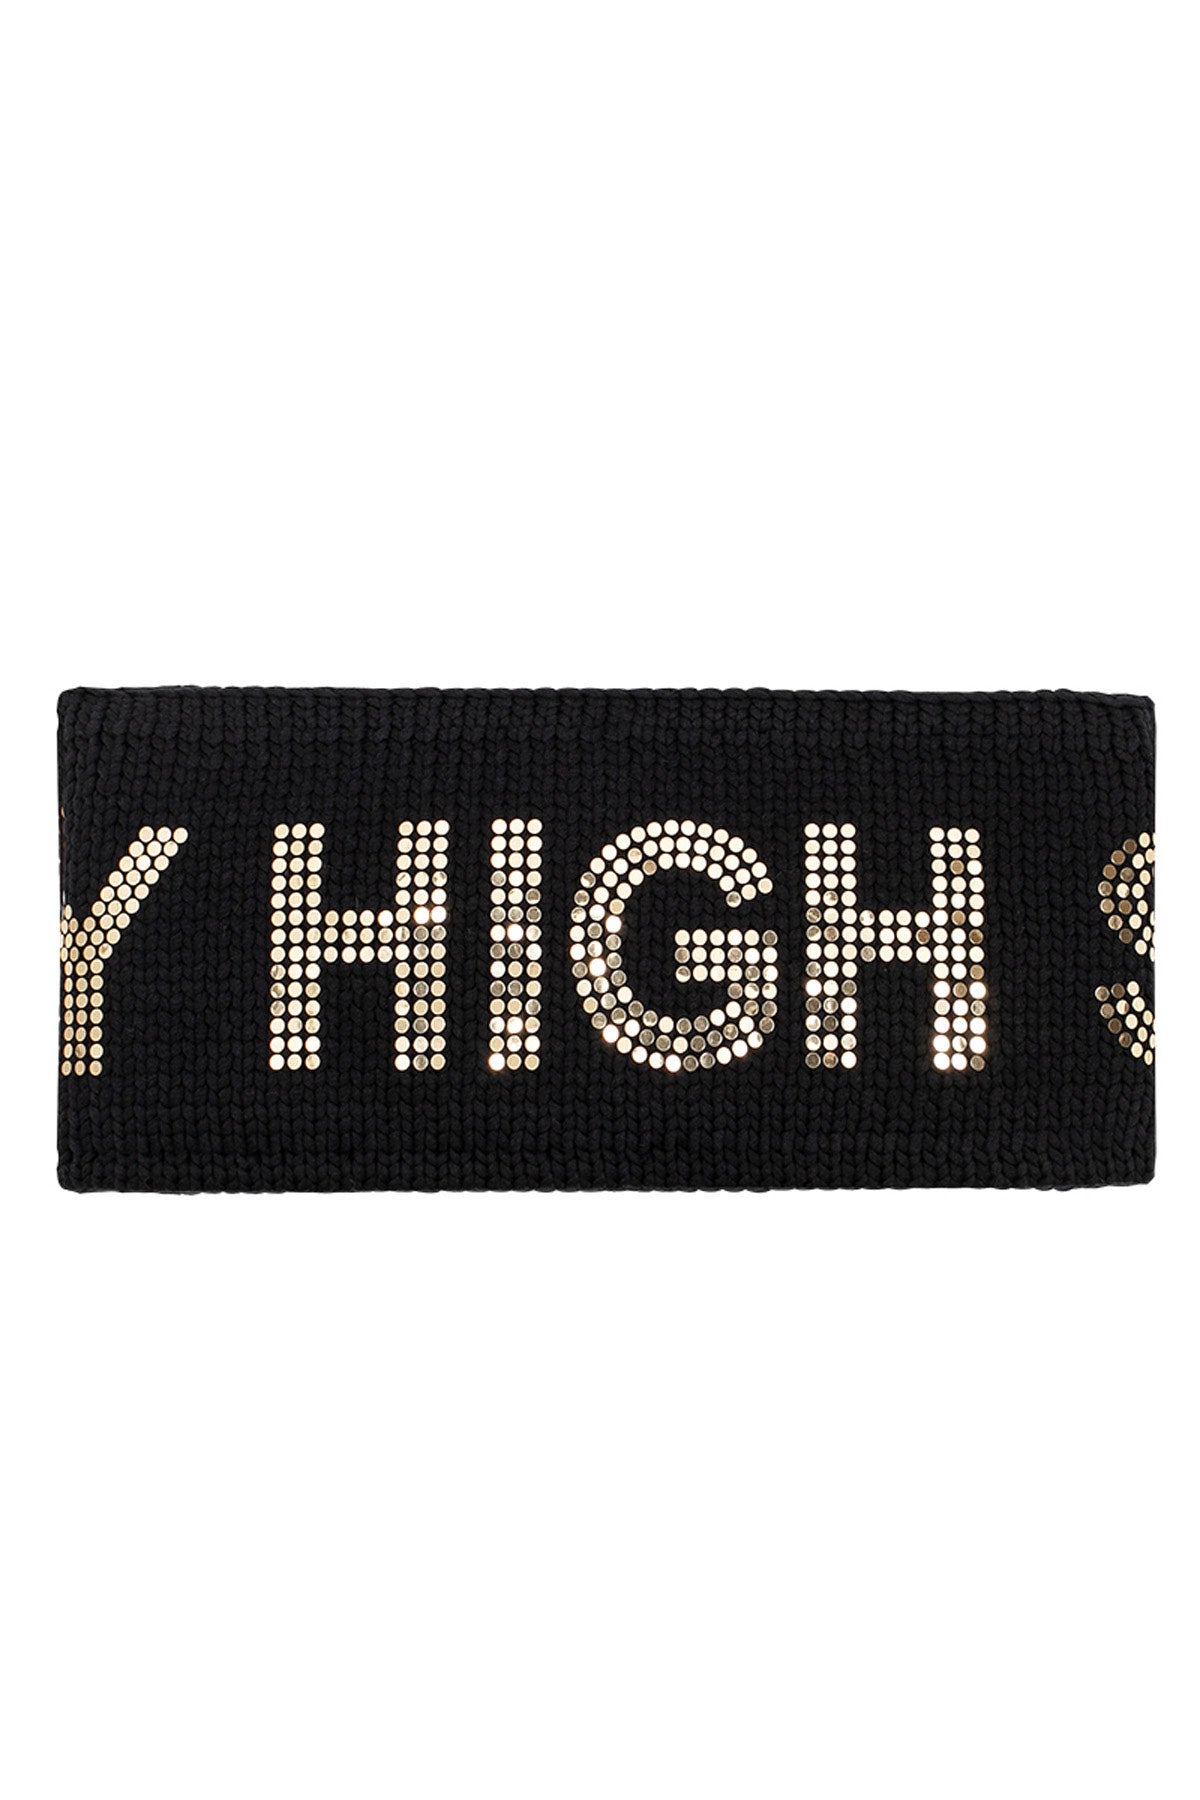 High Society Ski Headband in Black and Diamante